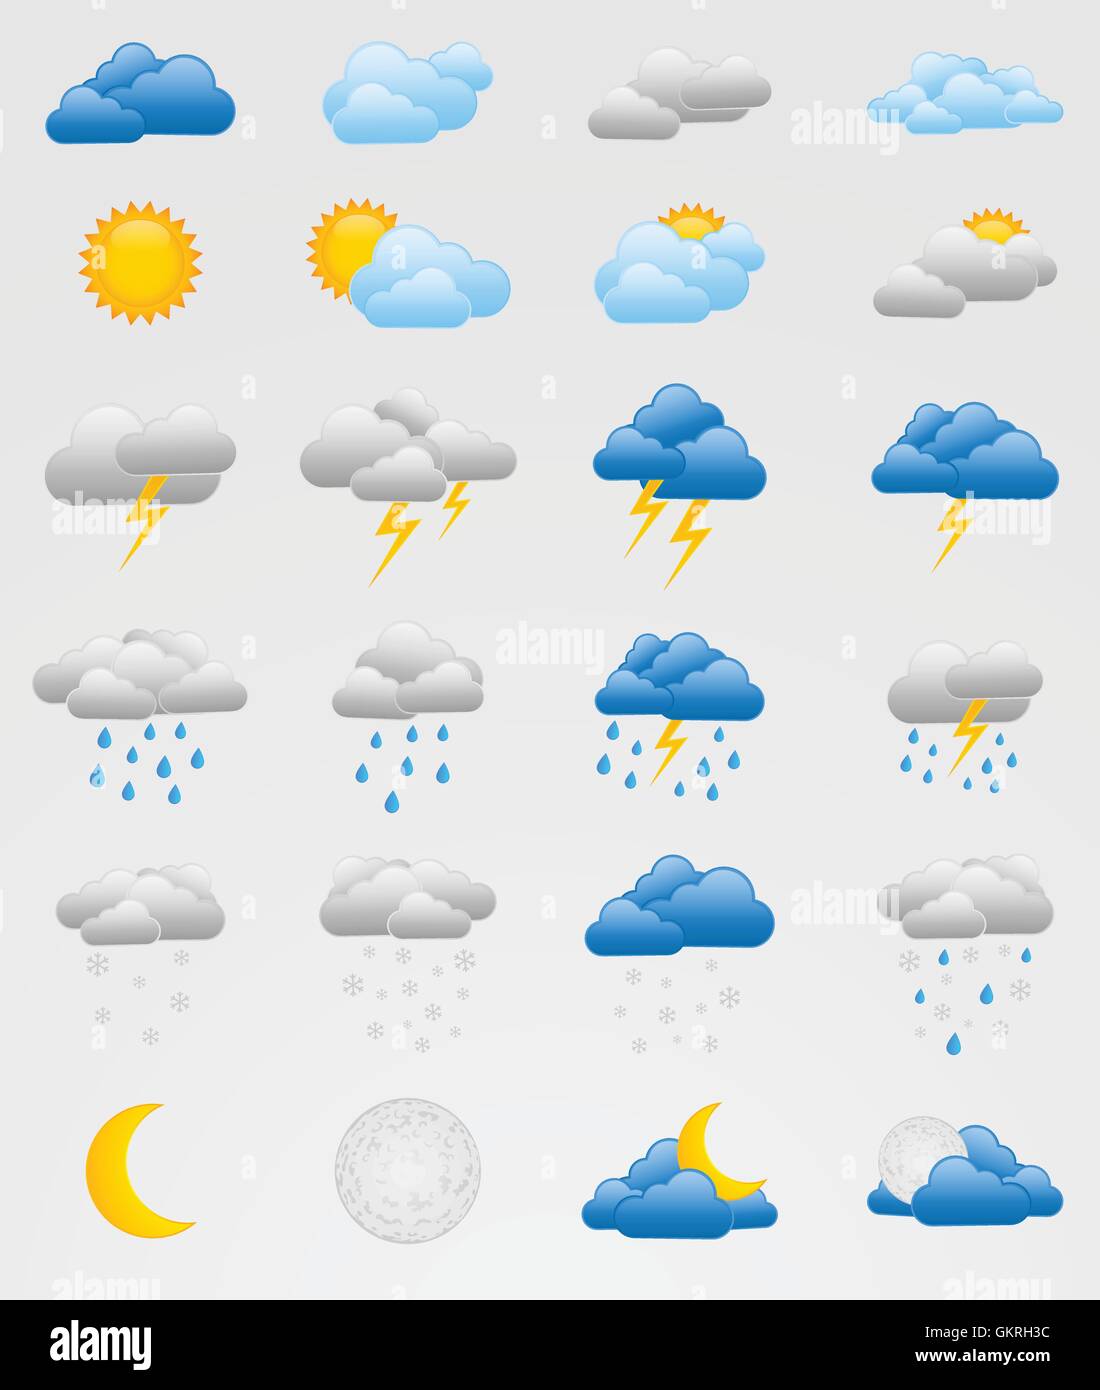 cloud forecast weather sign icon rain pictogram symbol pictograph trade symbol shine shines bright Stock Vector